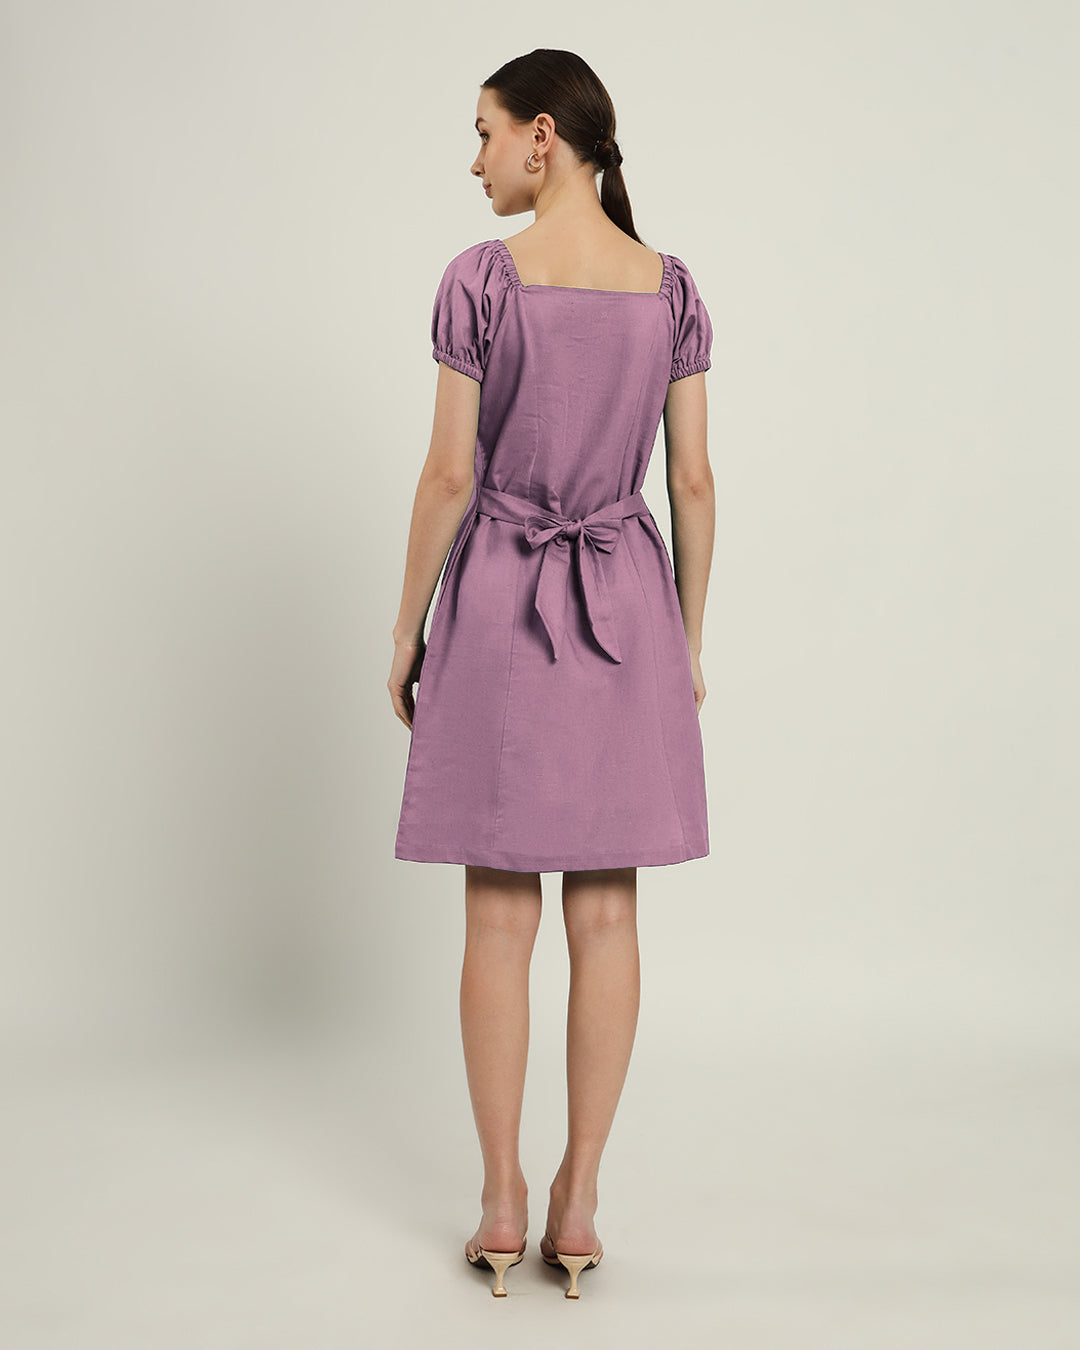 The Arar Purple Swirl Dress